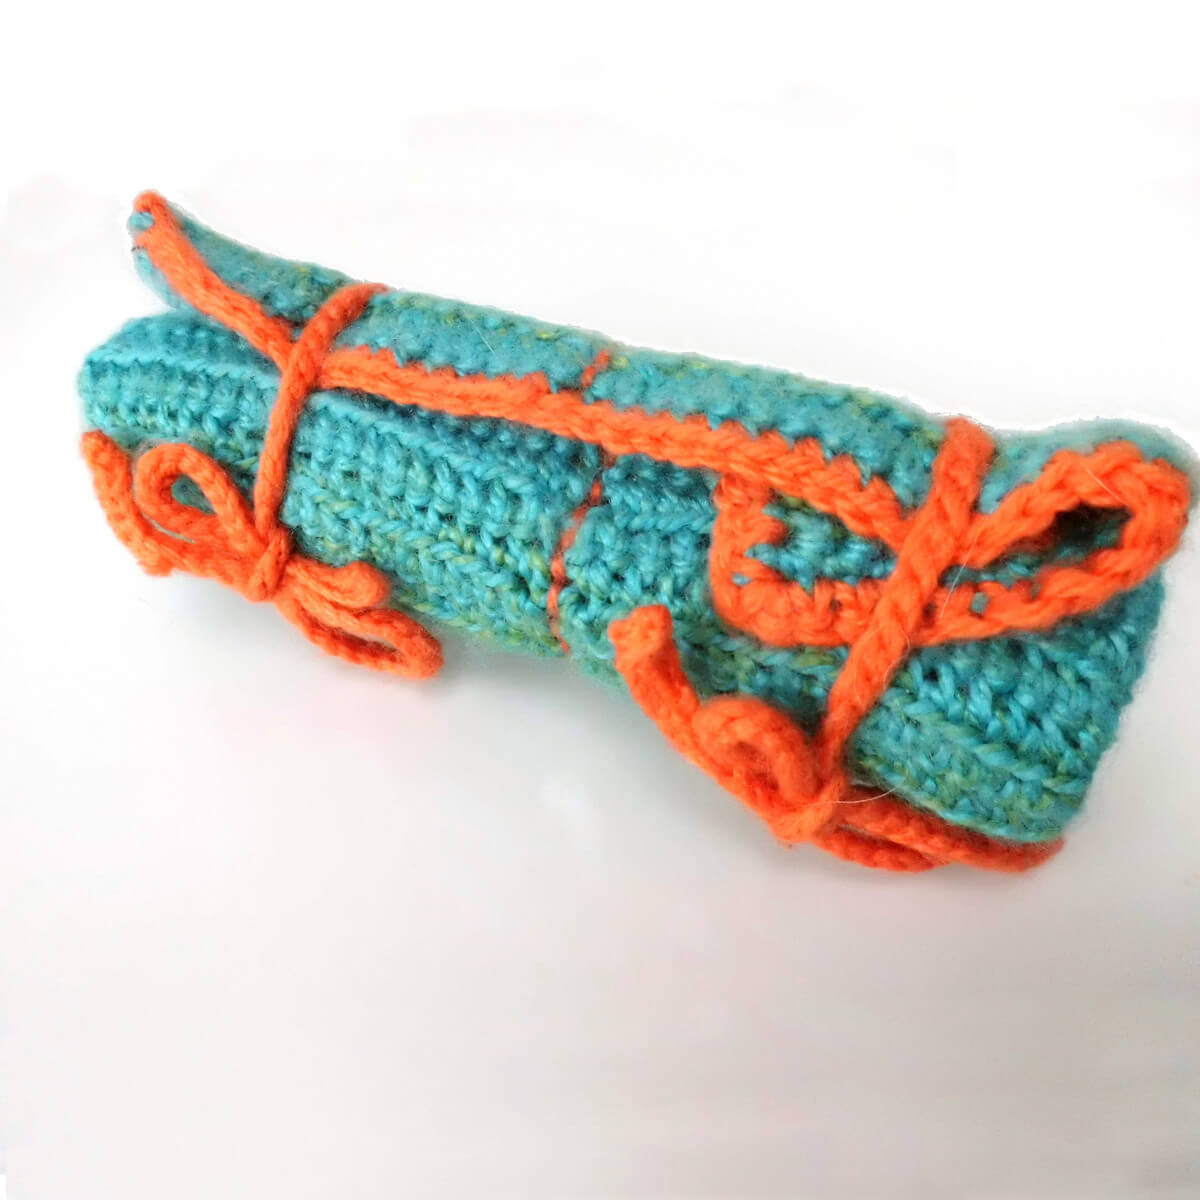 SUPER EASY Crochet Hook CASE Pattern, Pdf Hook Organizer Diy